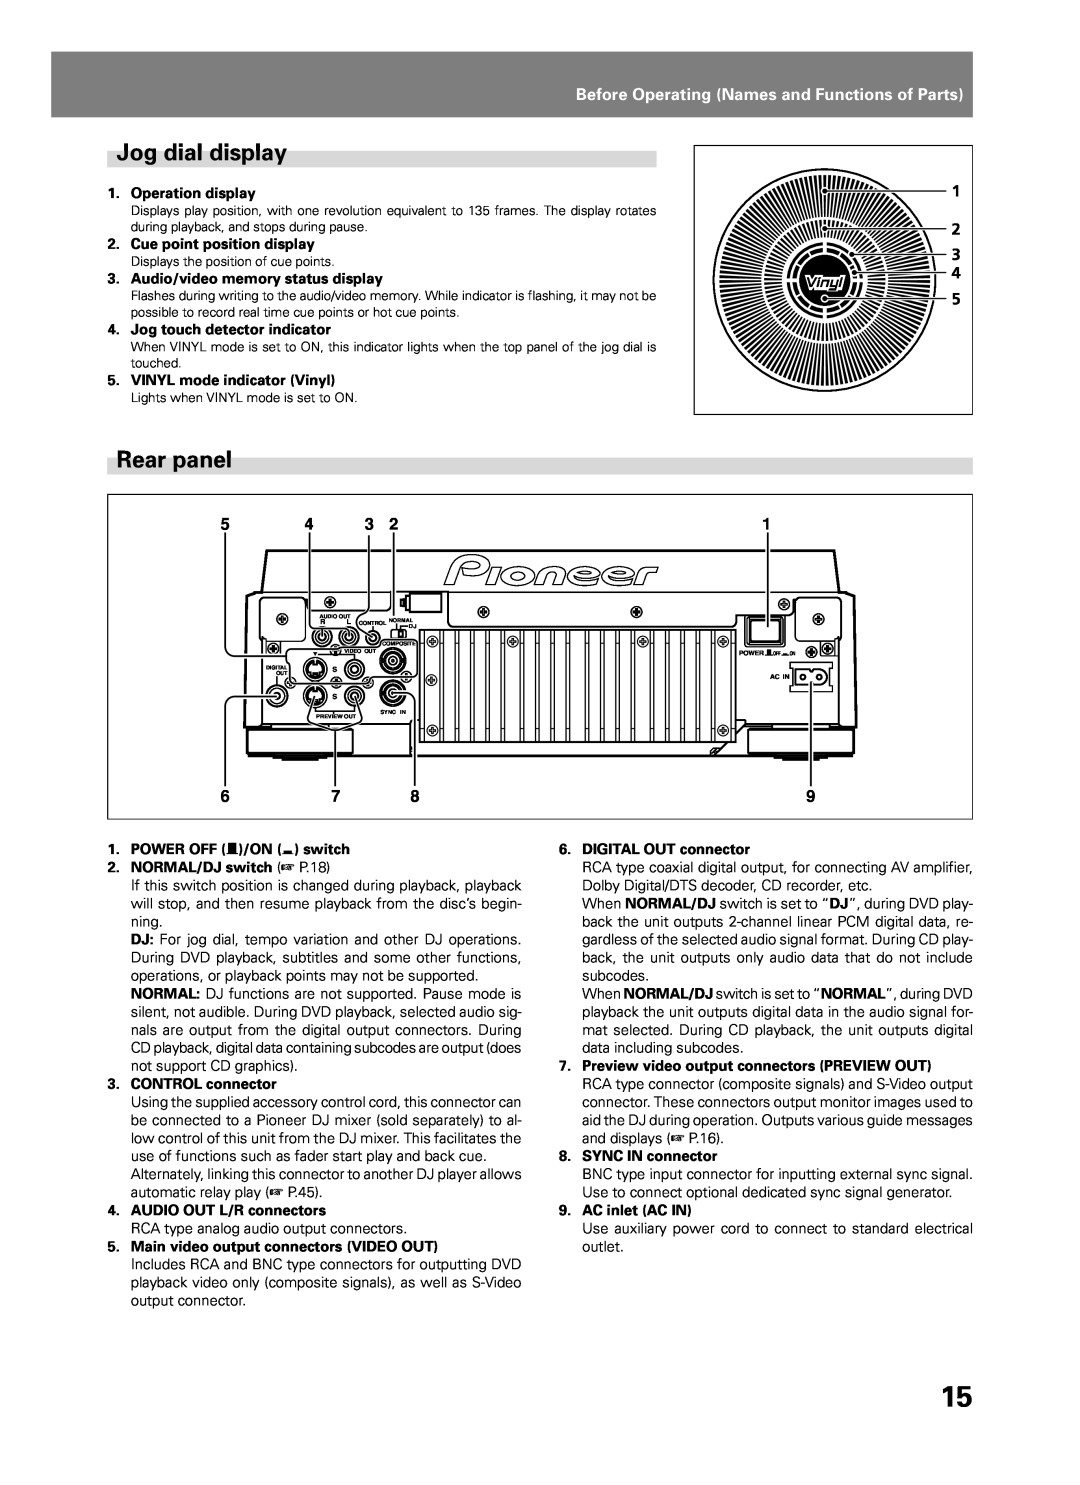 Pioneer DVJ-1000 manual Jog dial display, Rear panel, Before Operating Names and Functions of Parts 